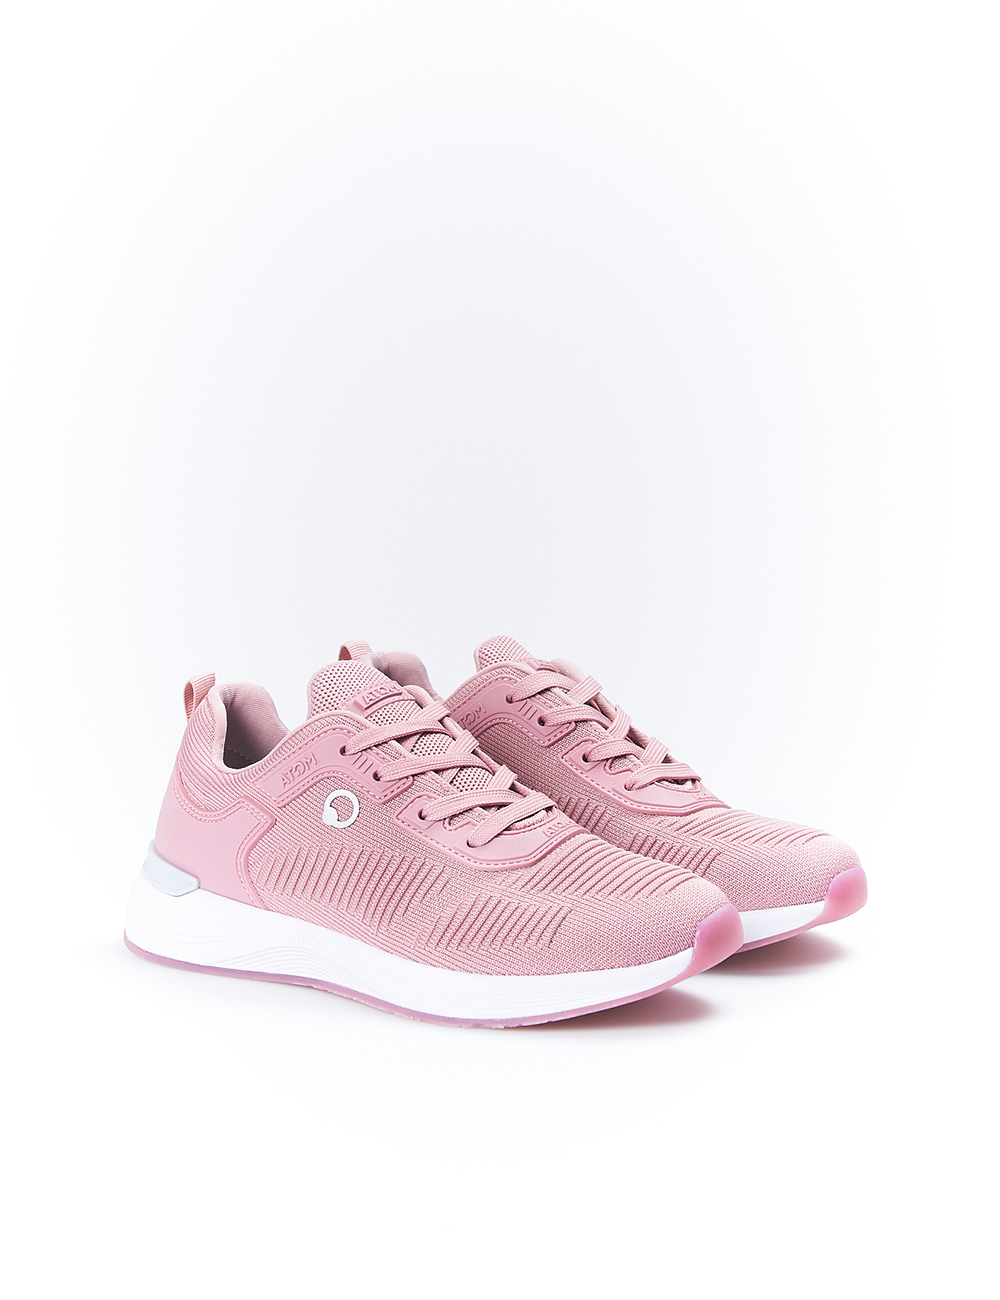 Zapatos Deportivos Atom By Fluchos At107 - Rosa - Sneakers Para Mujer  MKP